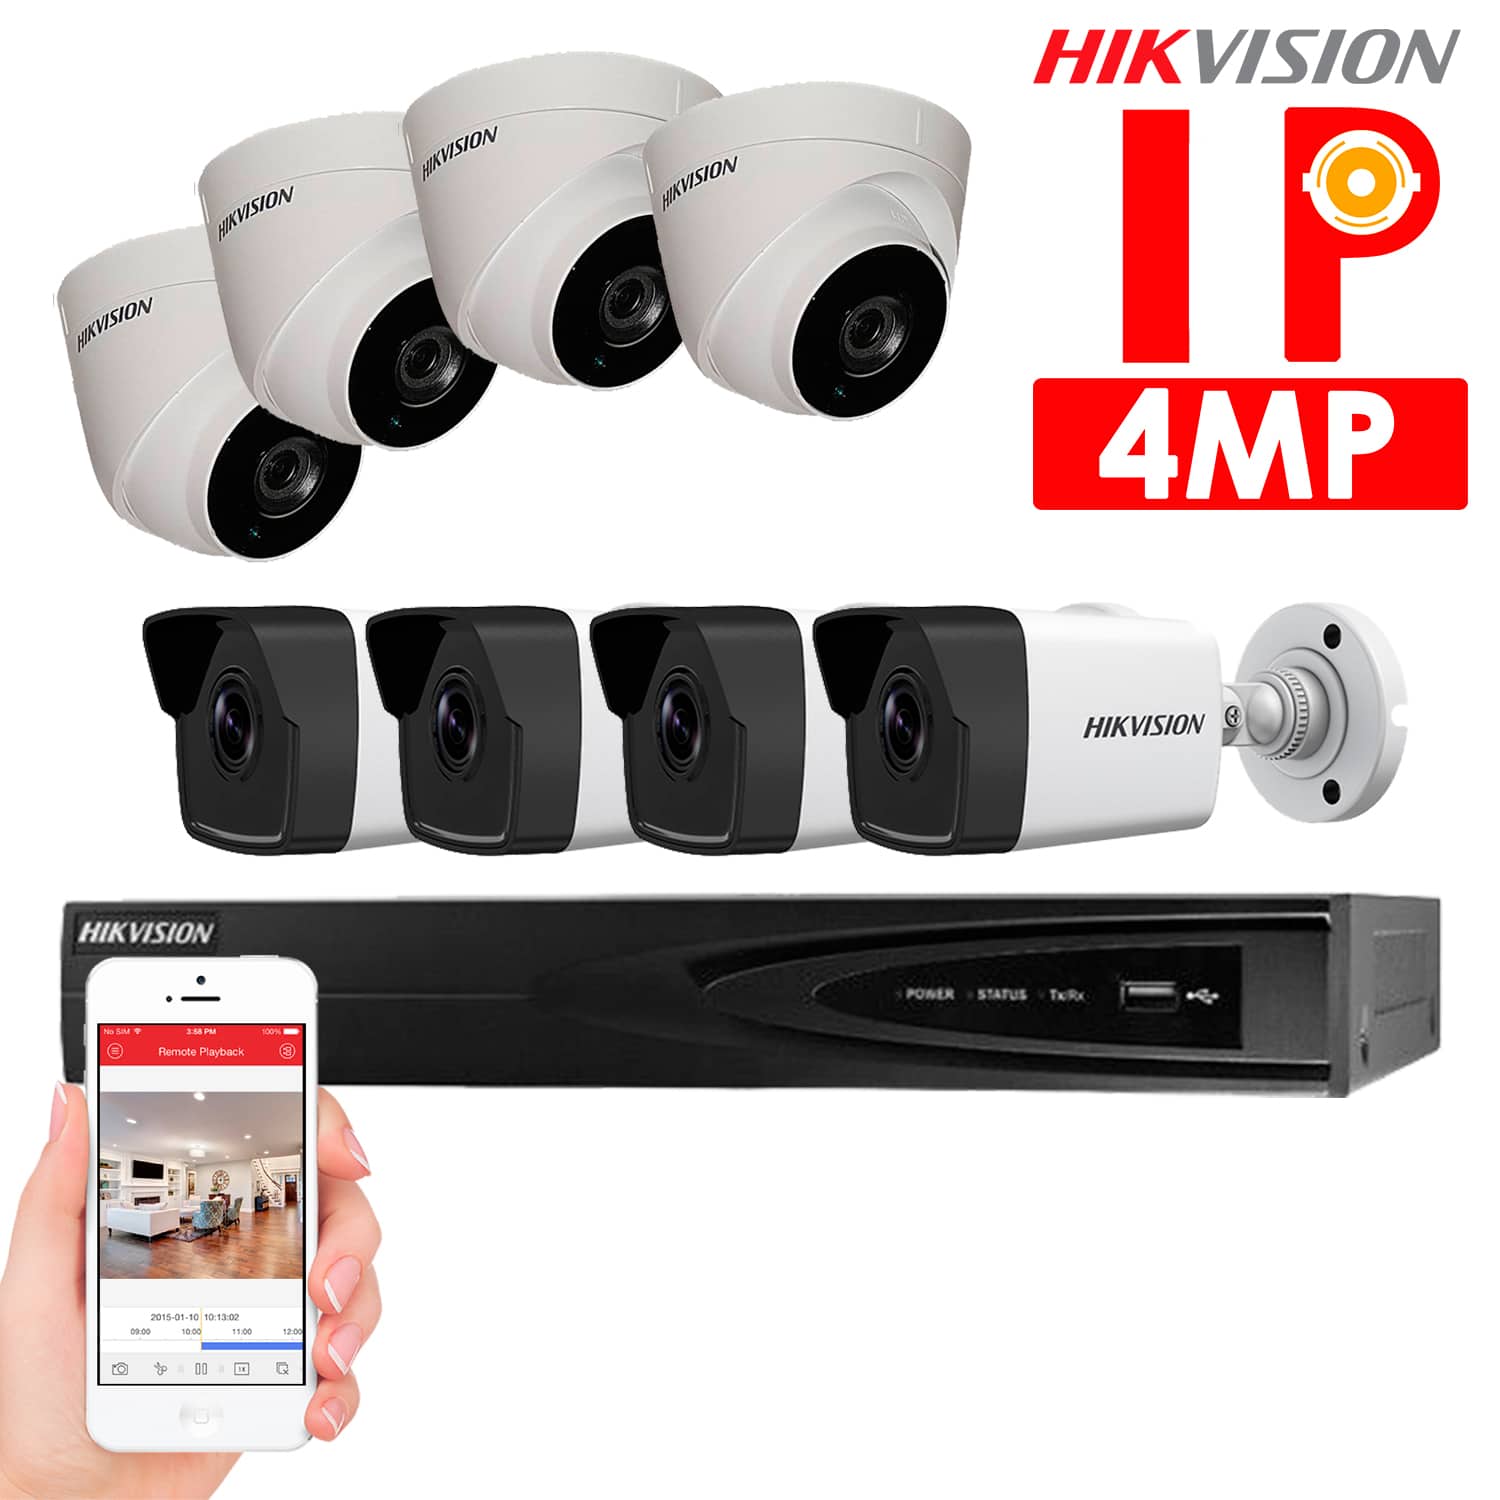 KIT Cámaras de seguridad IP Hikvision – KIT 8 cámaras IP 4Mp – Tubo y Domo – HKIPD-082 – Sistemas de Seguridad Lima Perú – ALFASEGUR